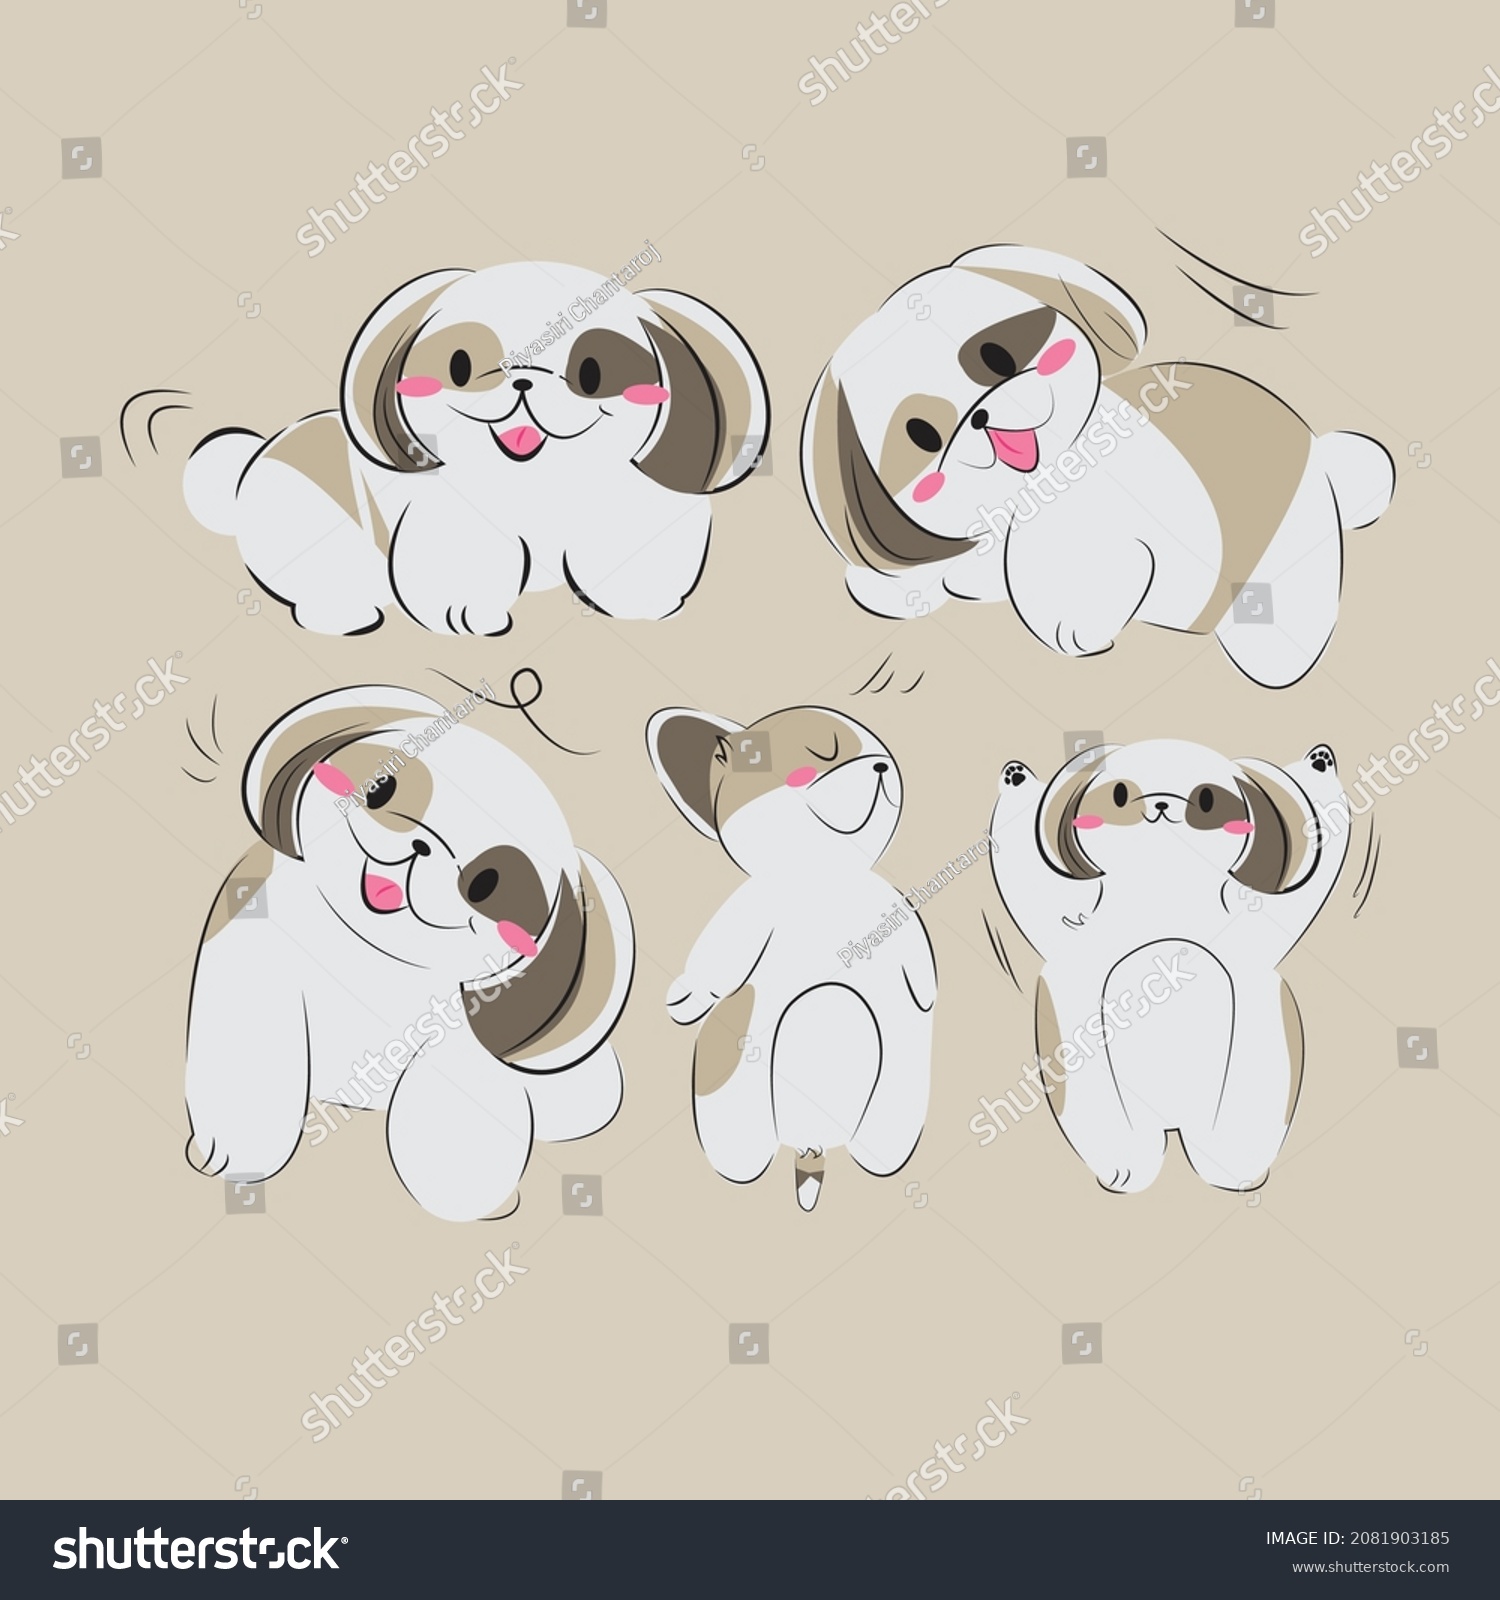 SVG of Cartoon Shih tzu dogs set. llustration for children. Cute Shih tzu dogs in different poses. svg